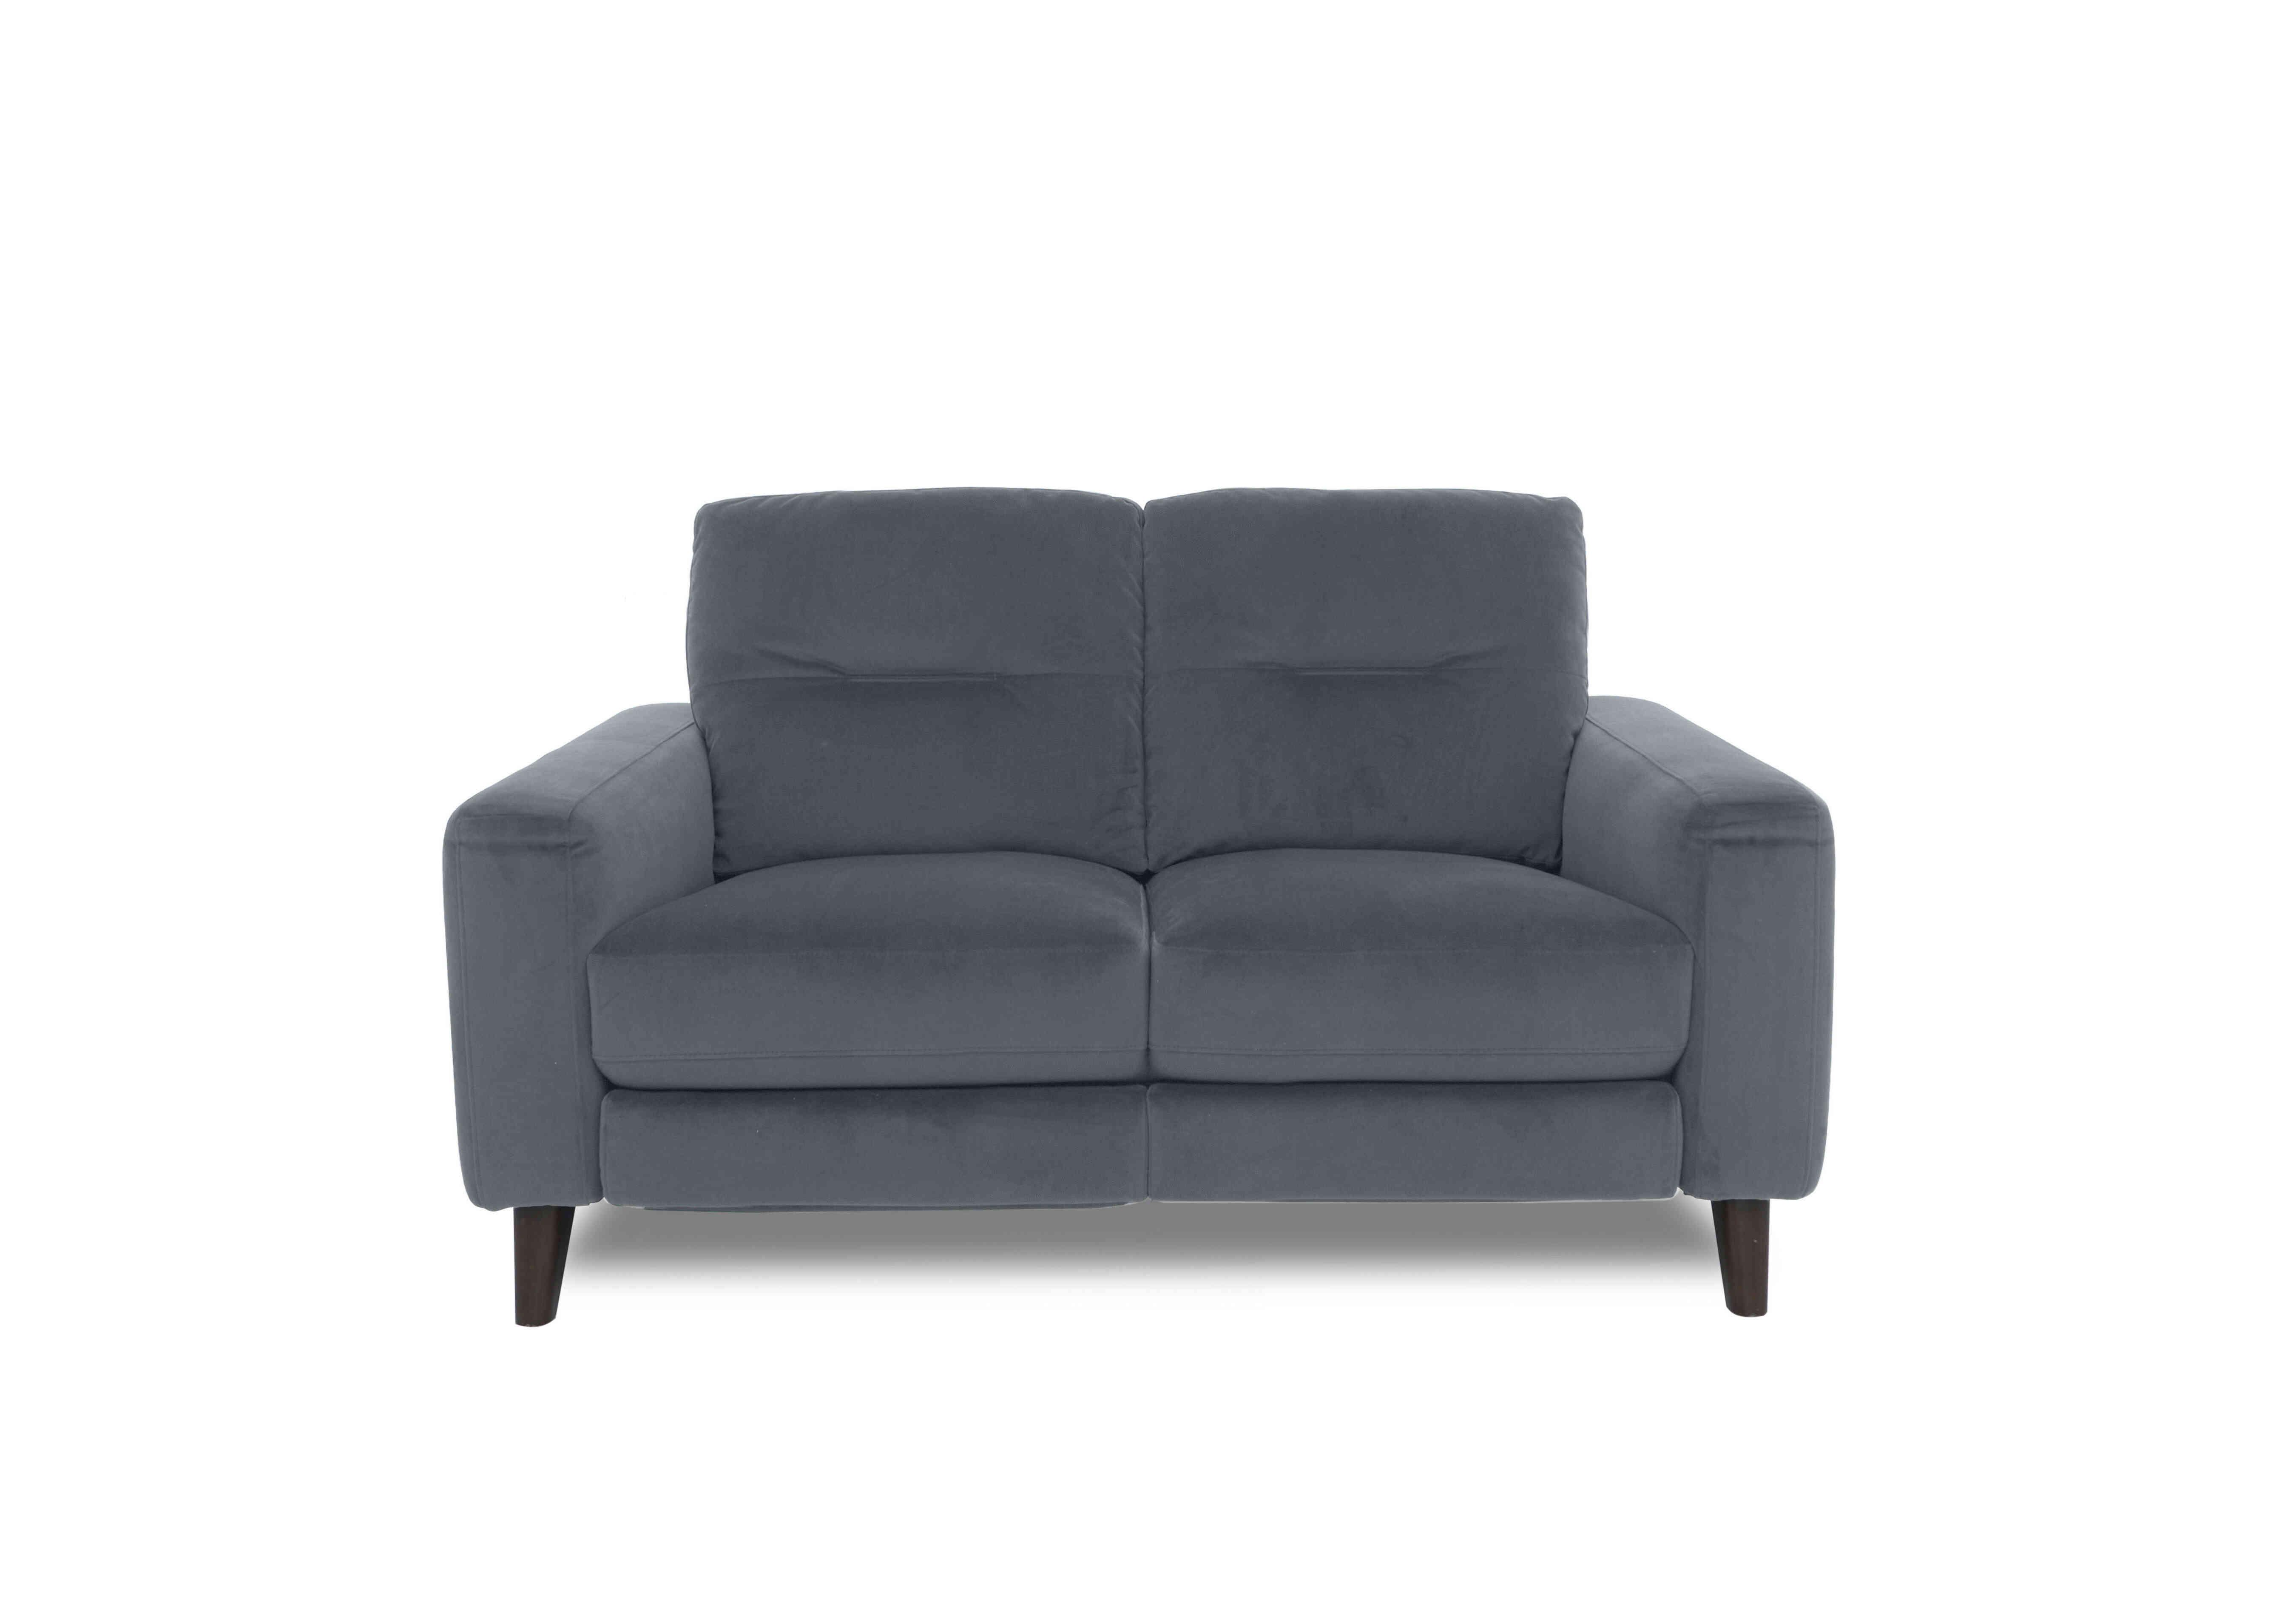 Jules 2 Seater Fabric Sofa in Fab-Meg-R20 Pewter on Furniture Village